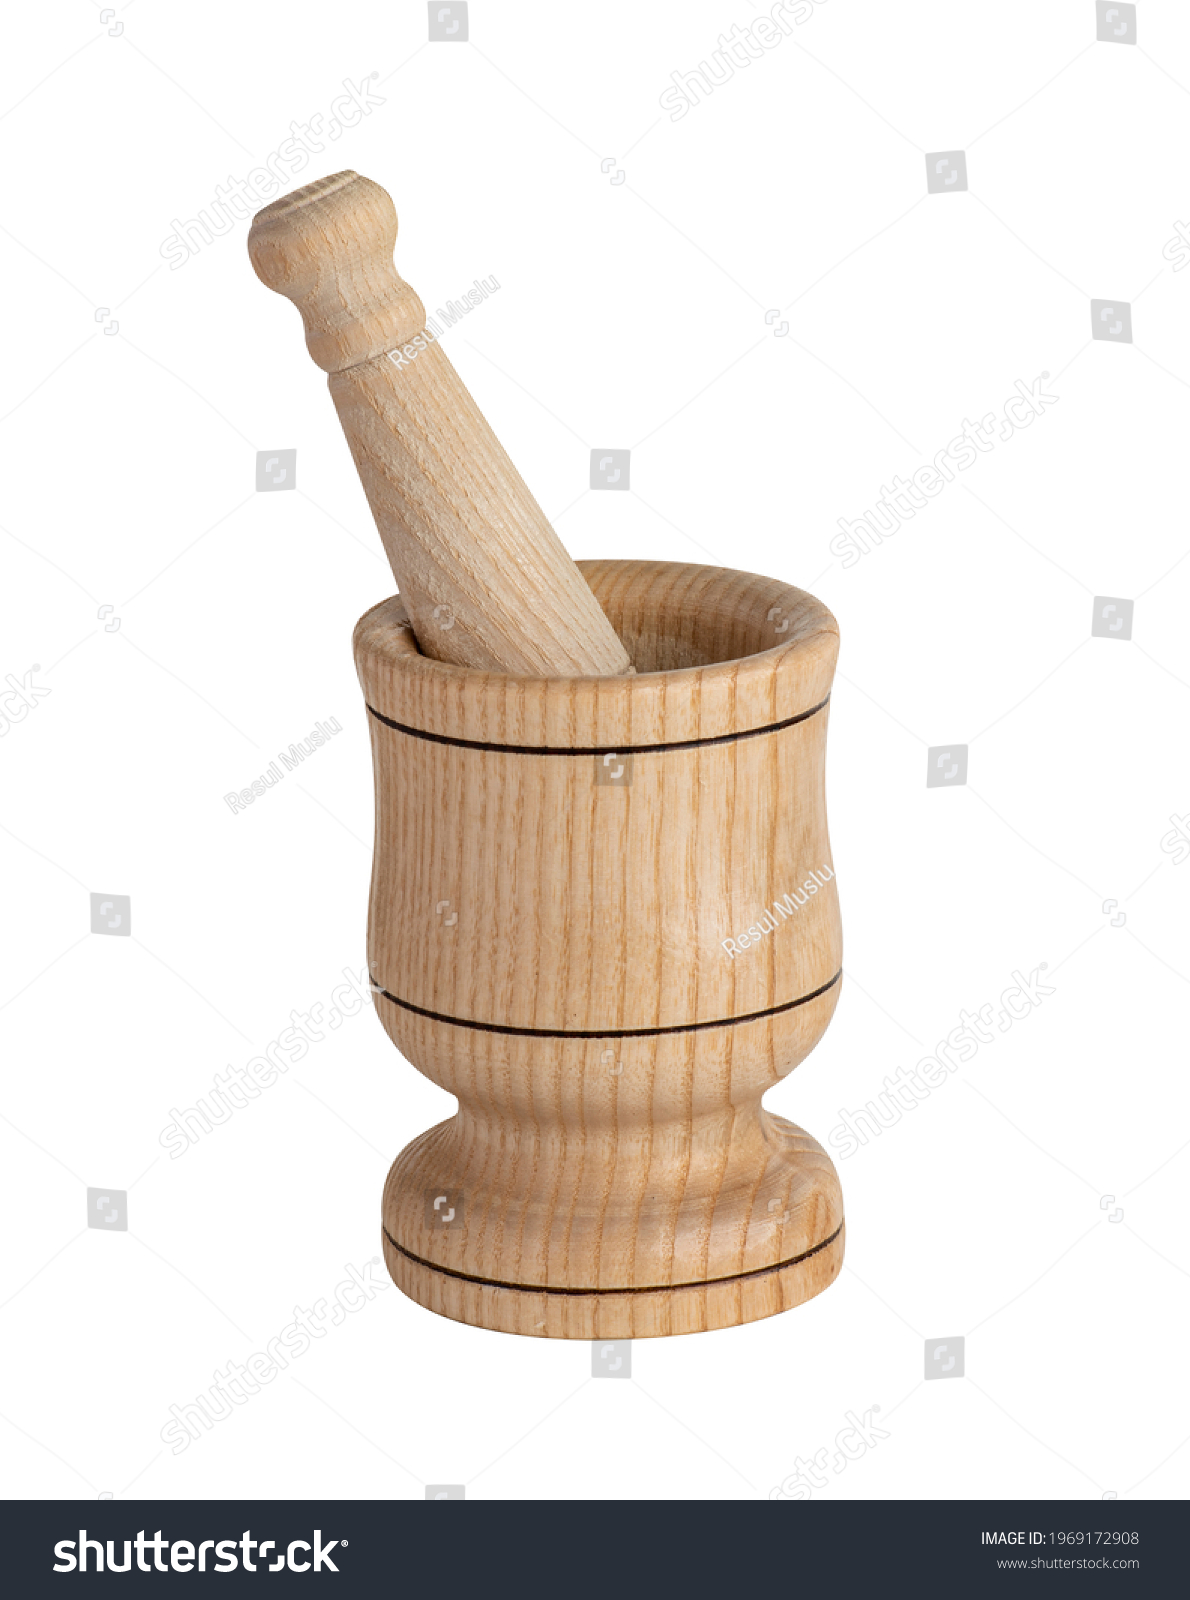 Wooden Mortar Pestle. Grinding Bowl Set. Garlic Crush Pot. Spice Herbs Crusher Bowl. Manual Smasher. Clipping Path.
 #1969172908